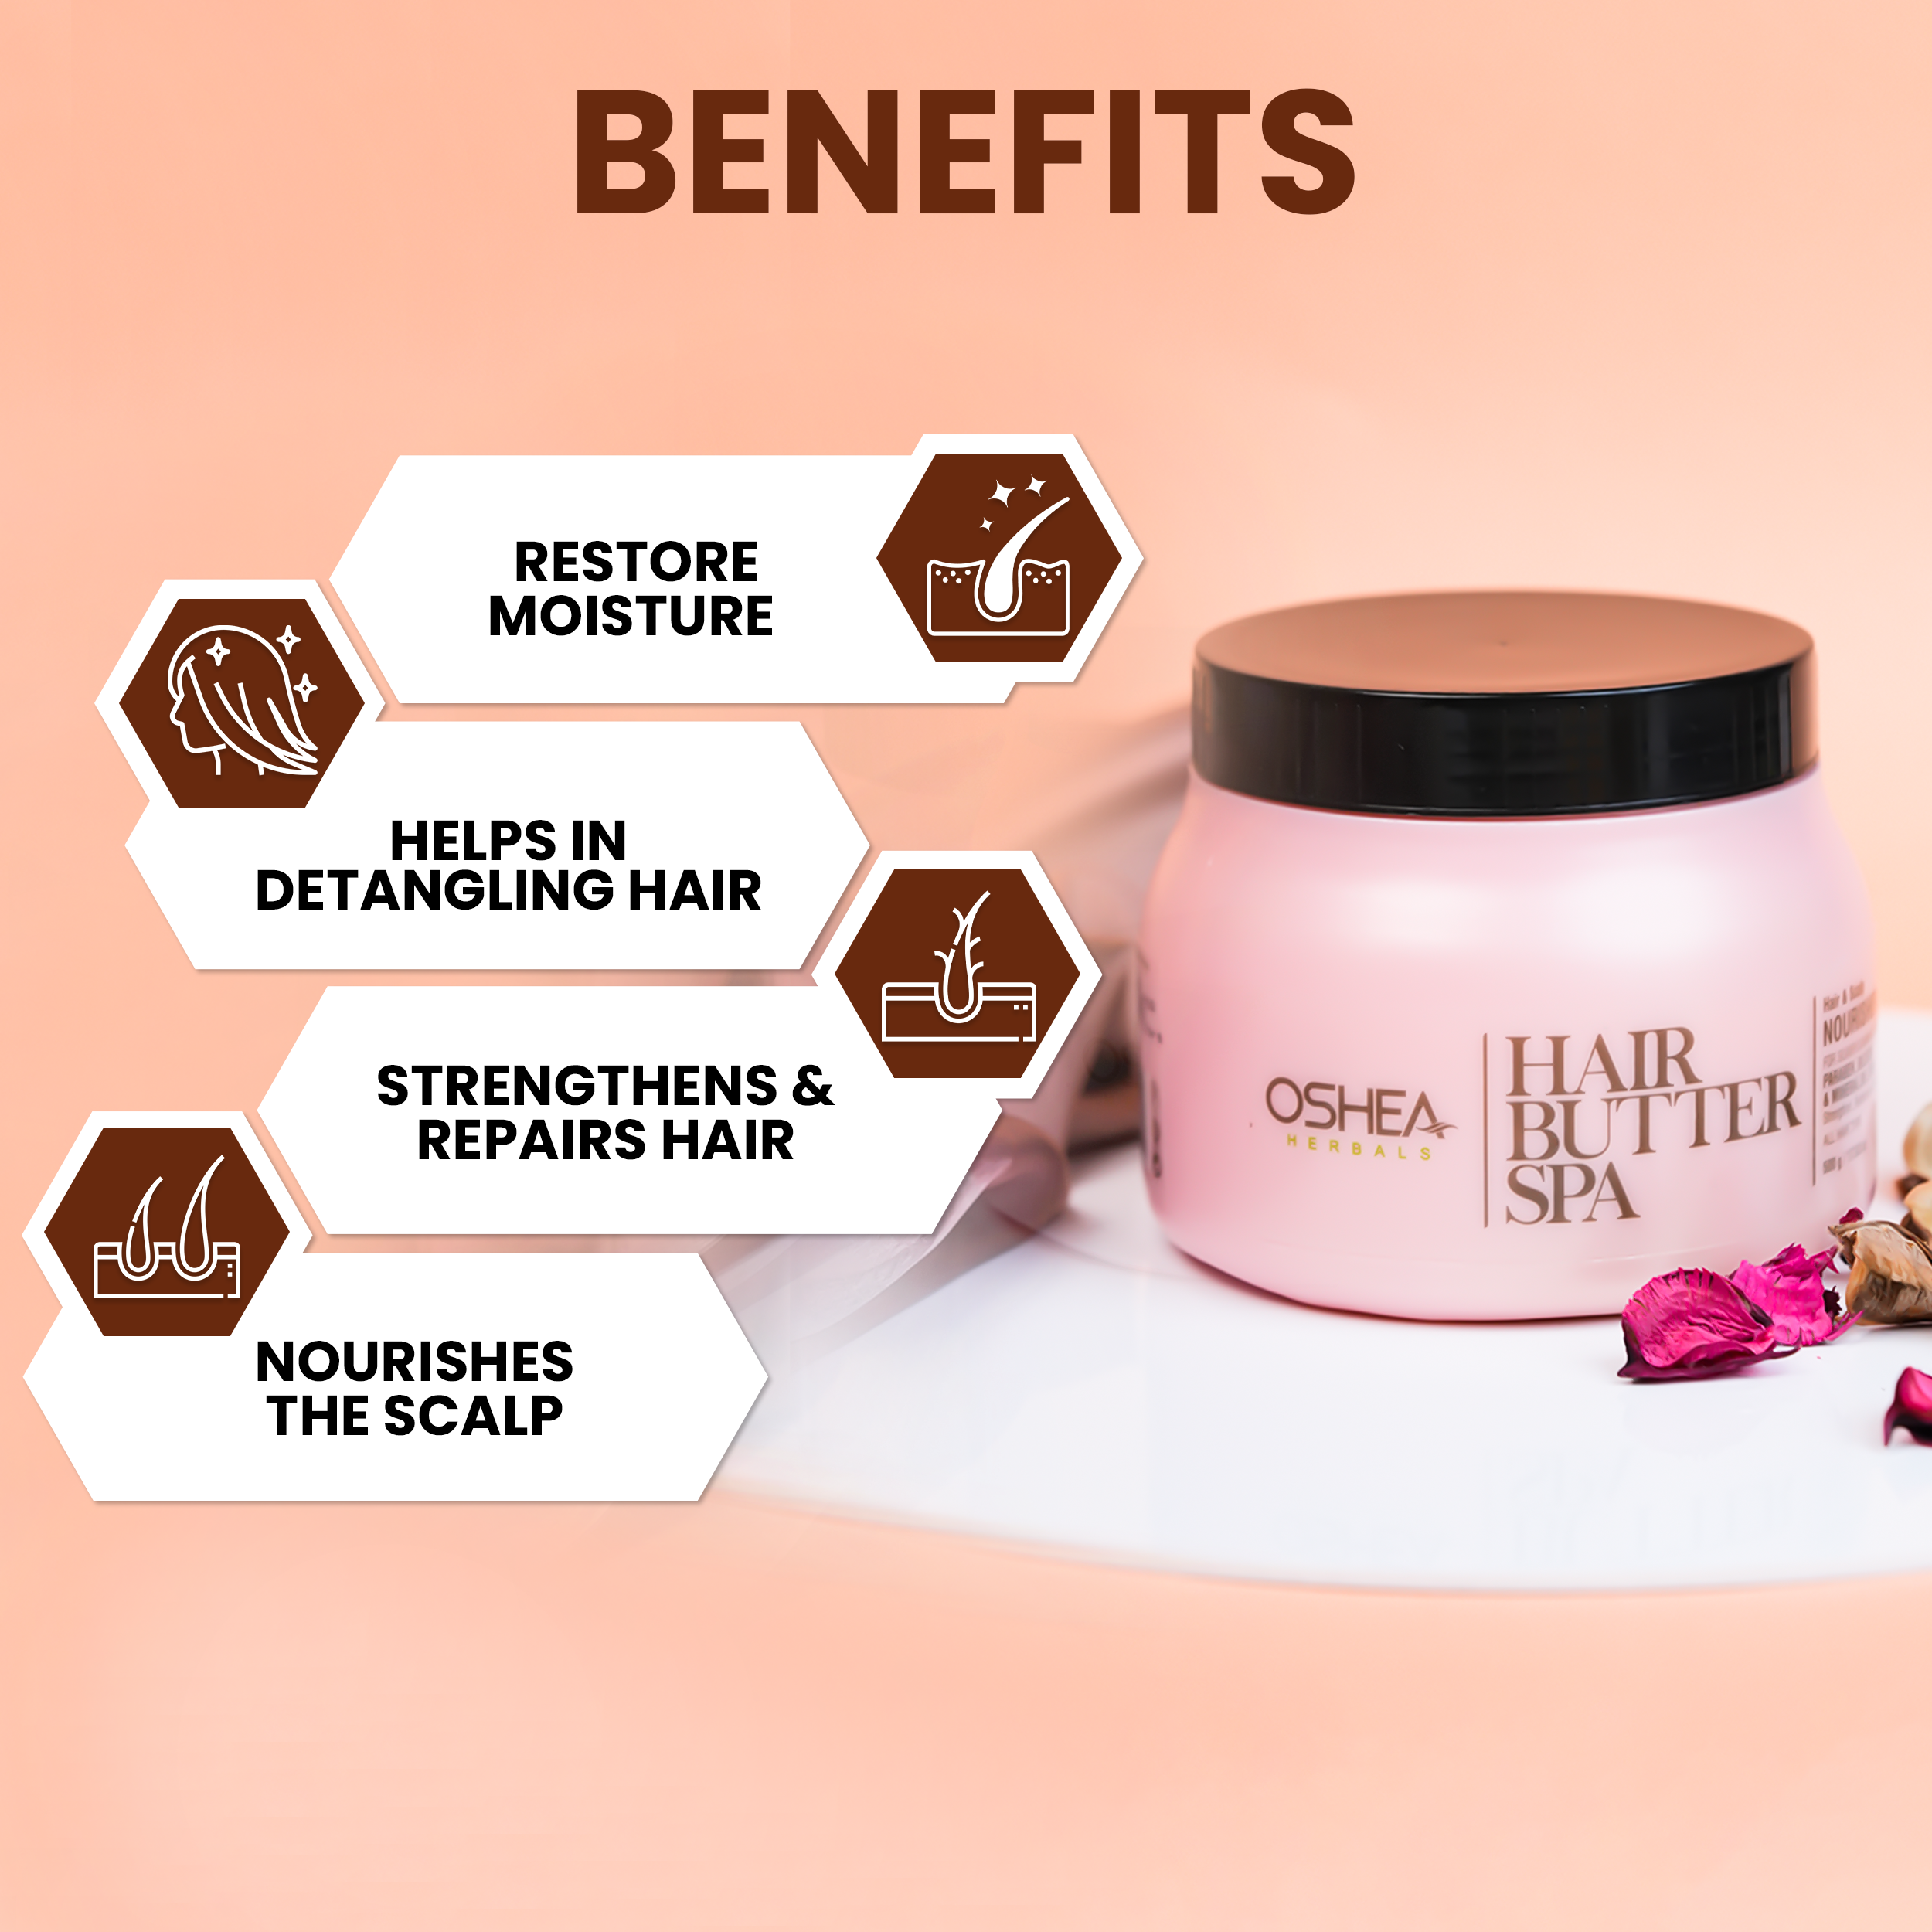 benefits Hair Butter Spa Oshea Herbals